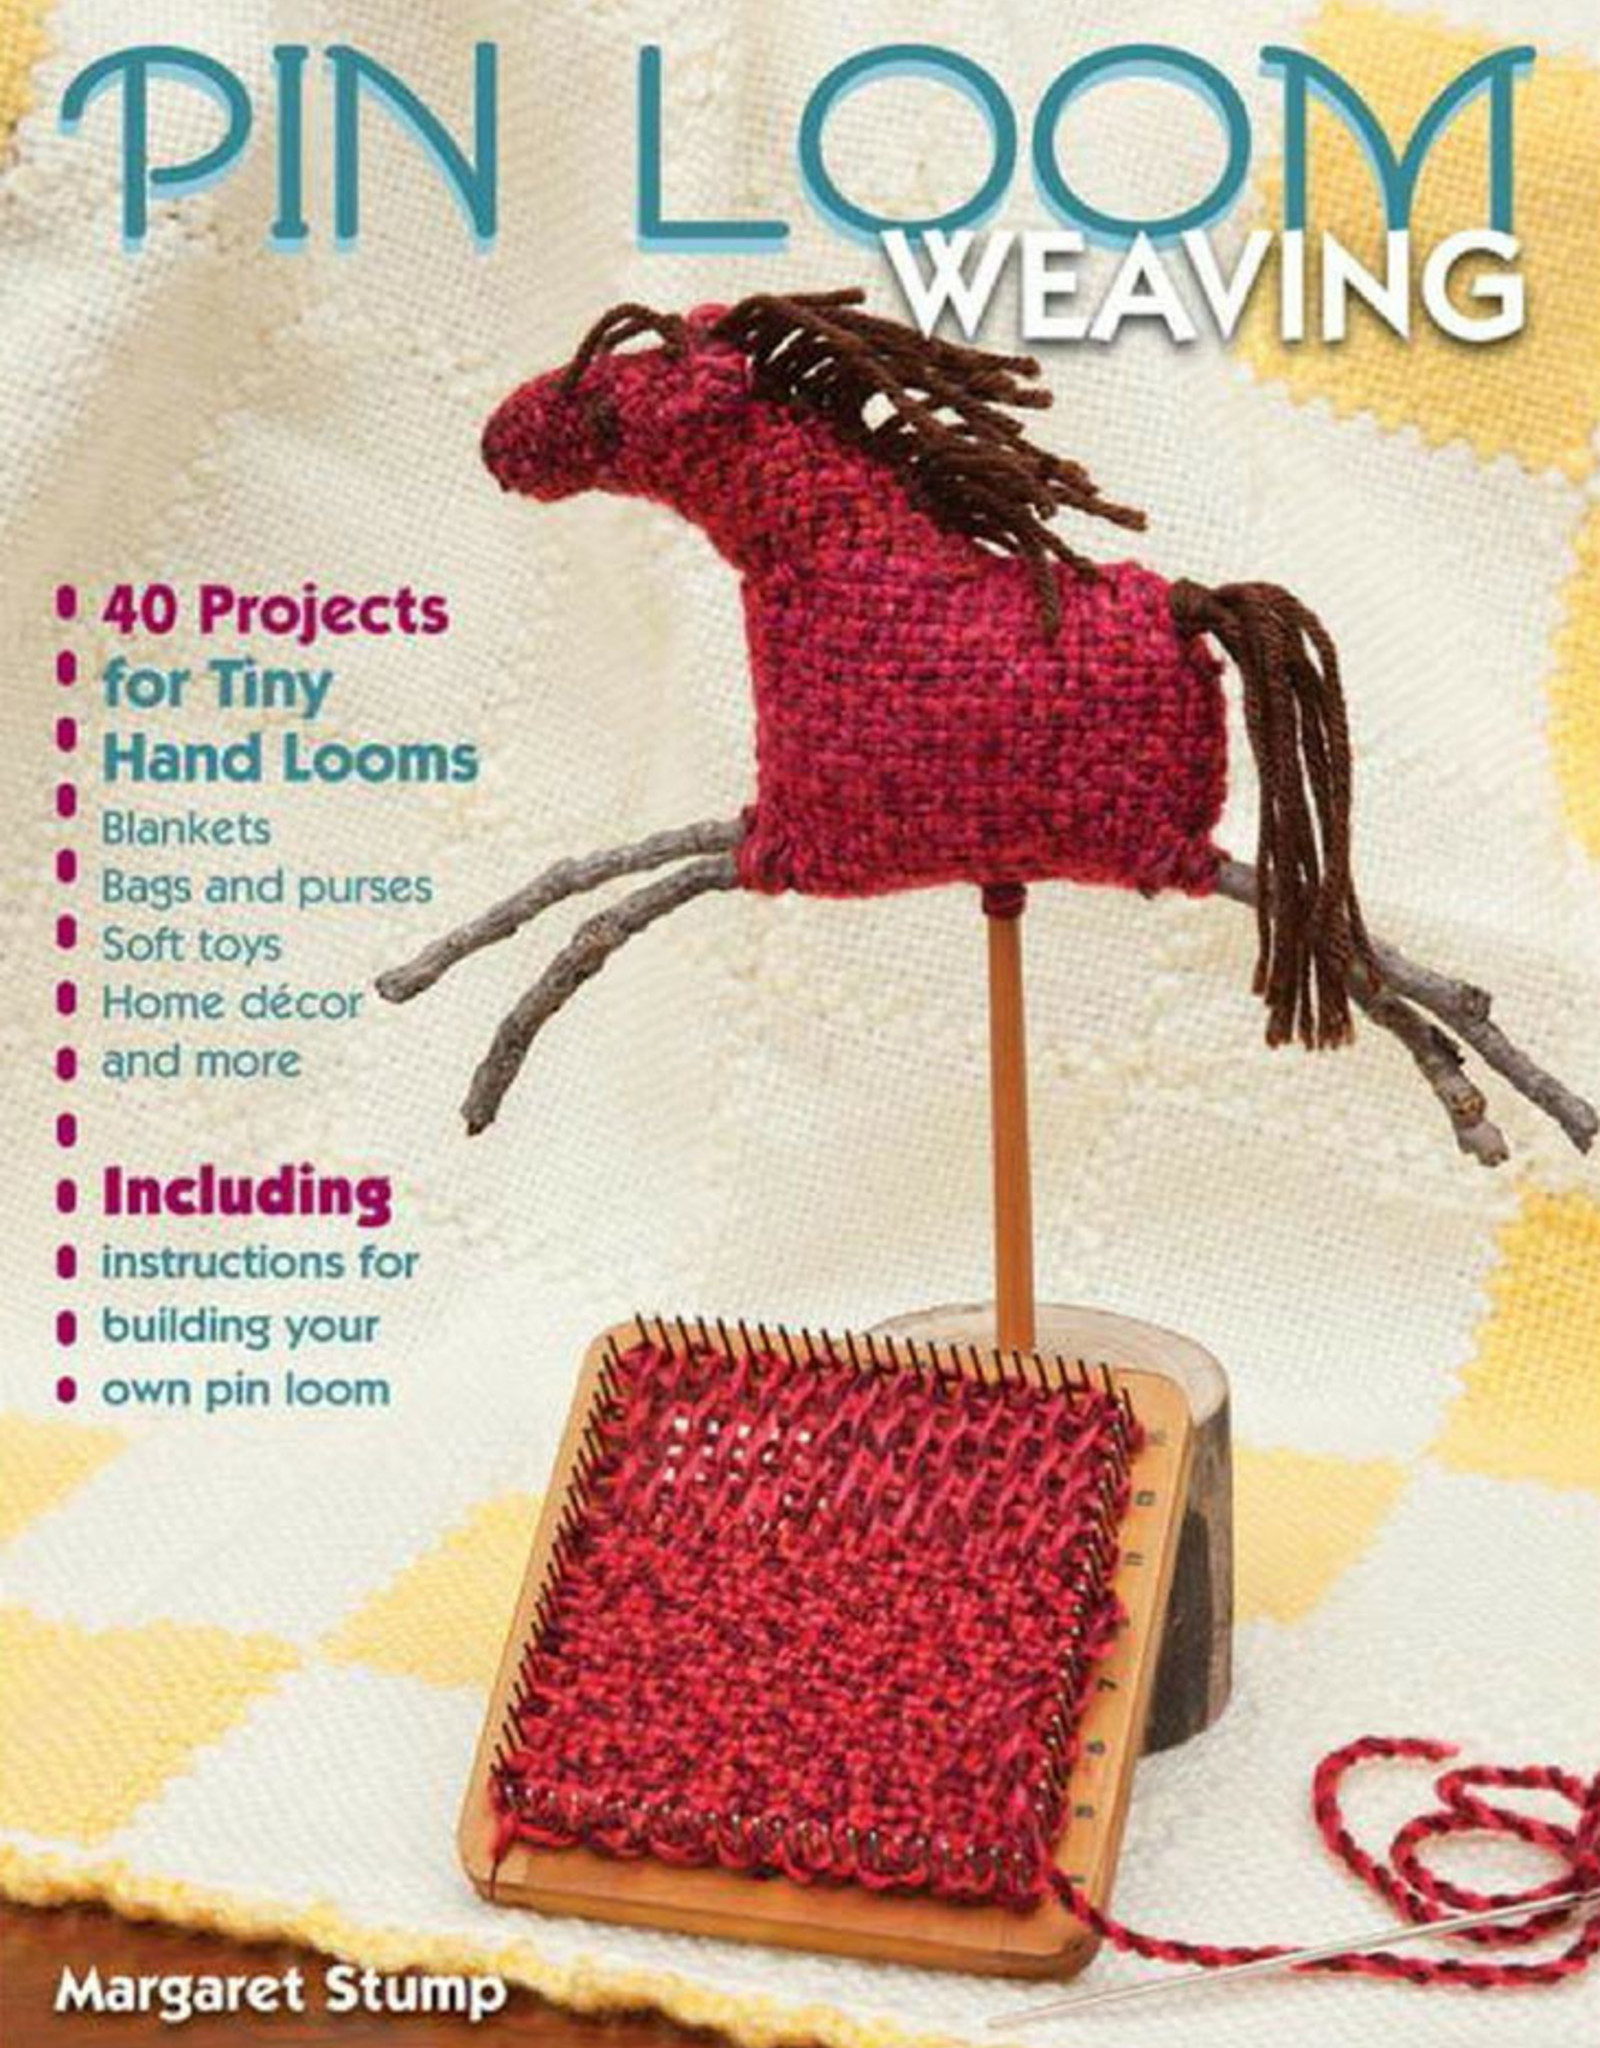 Pin Loom Weaving - The Yarn Patch